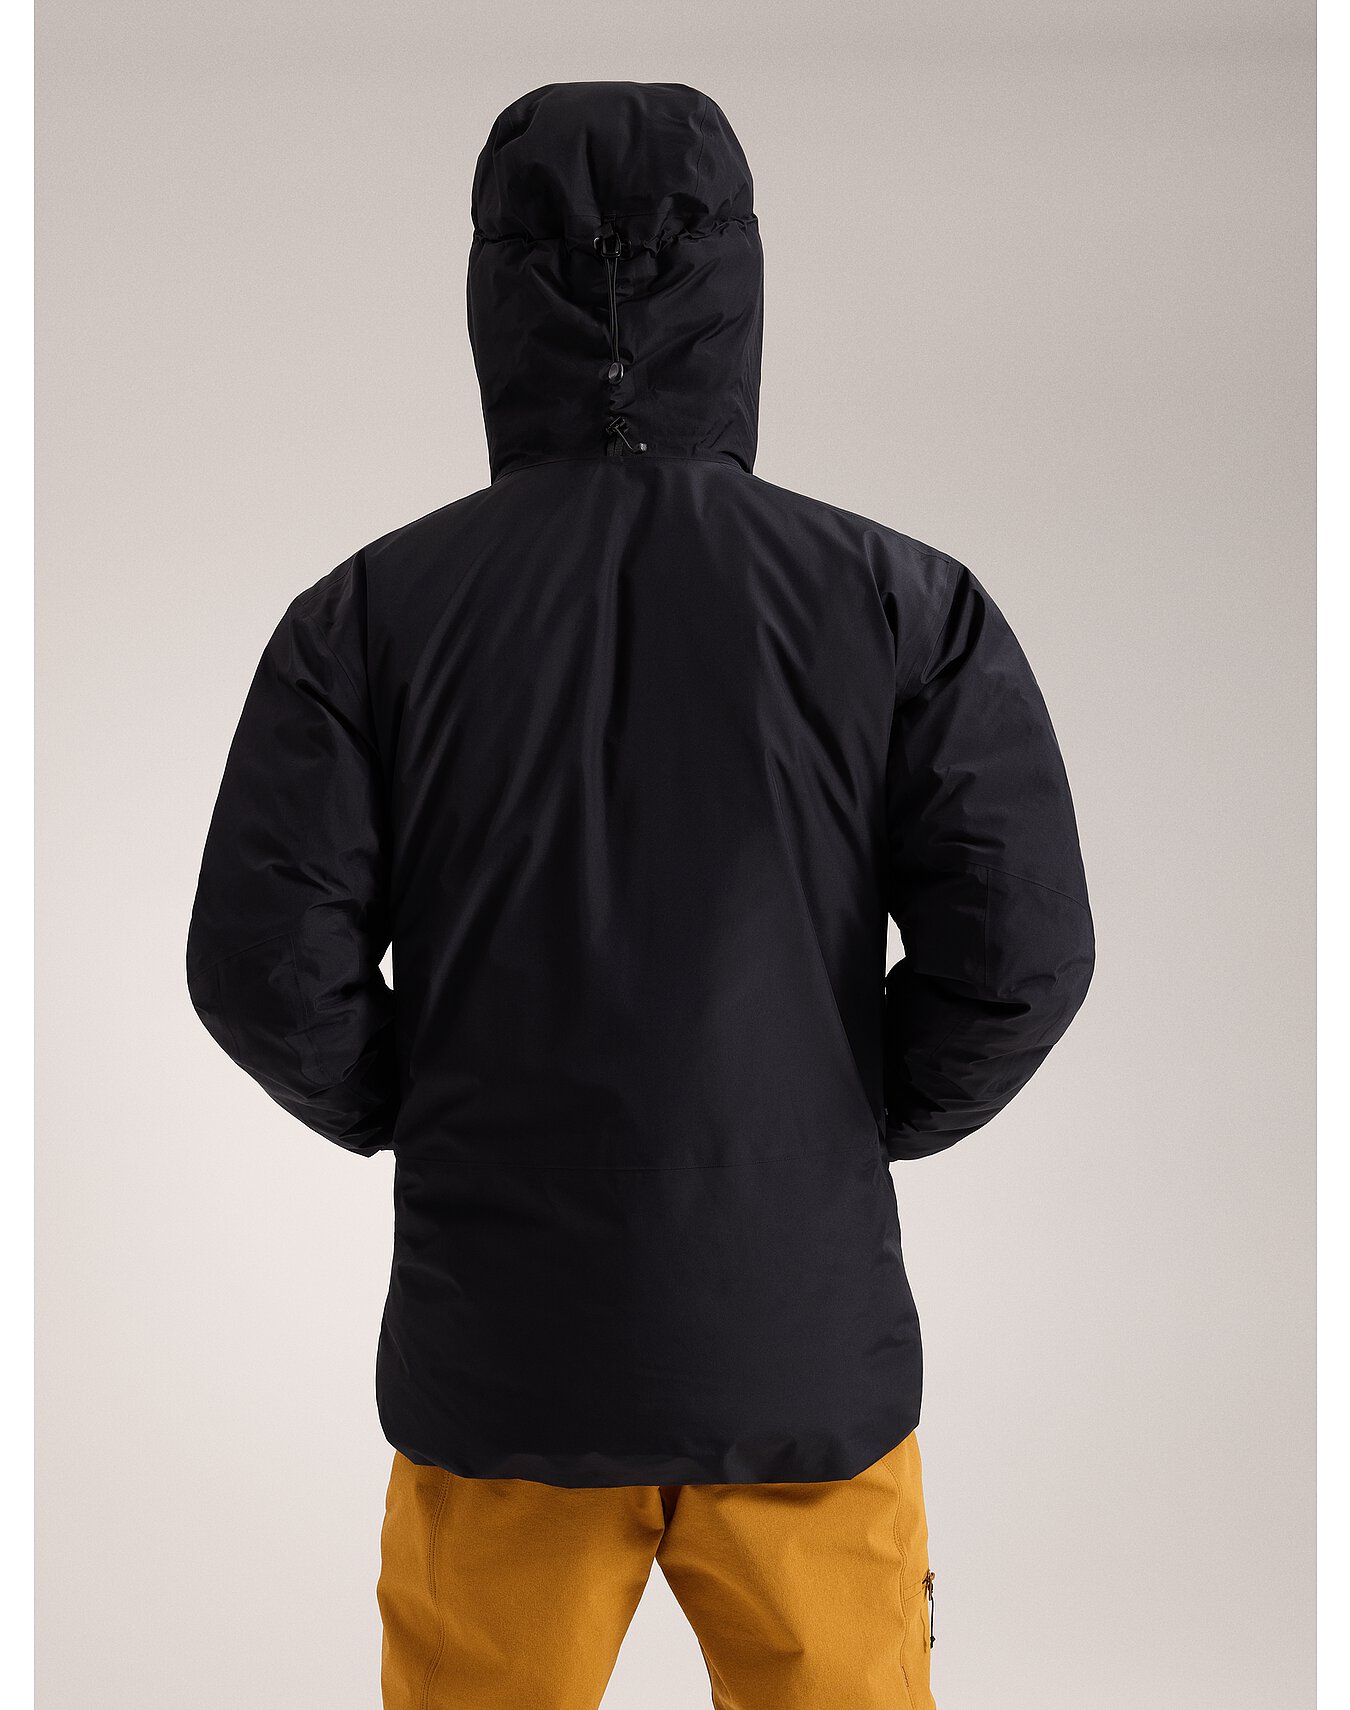 Beta Down Insulated Jacket Men's | Arc'teryx